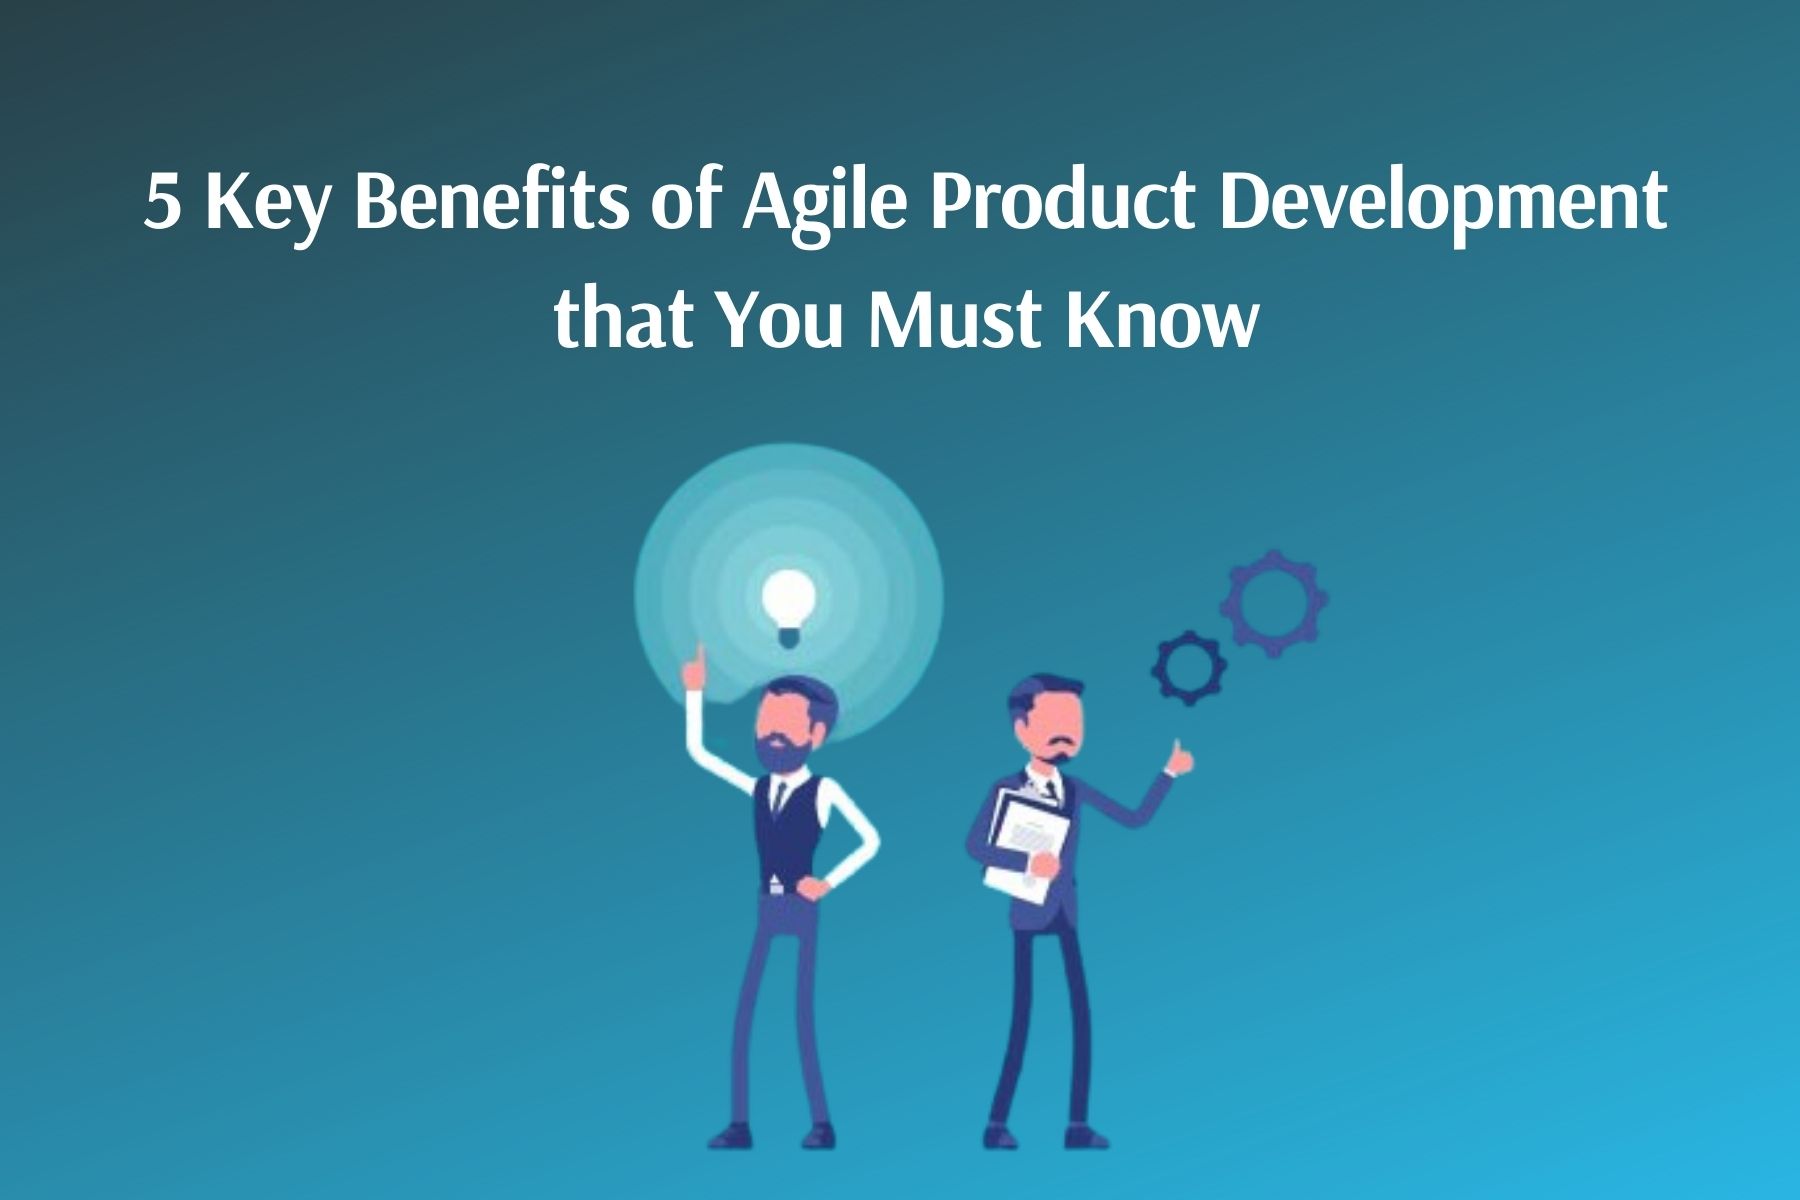 Benefits of Agile Product Development